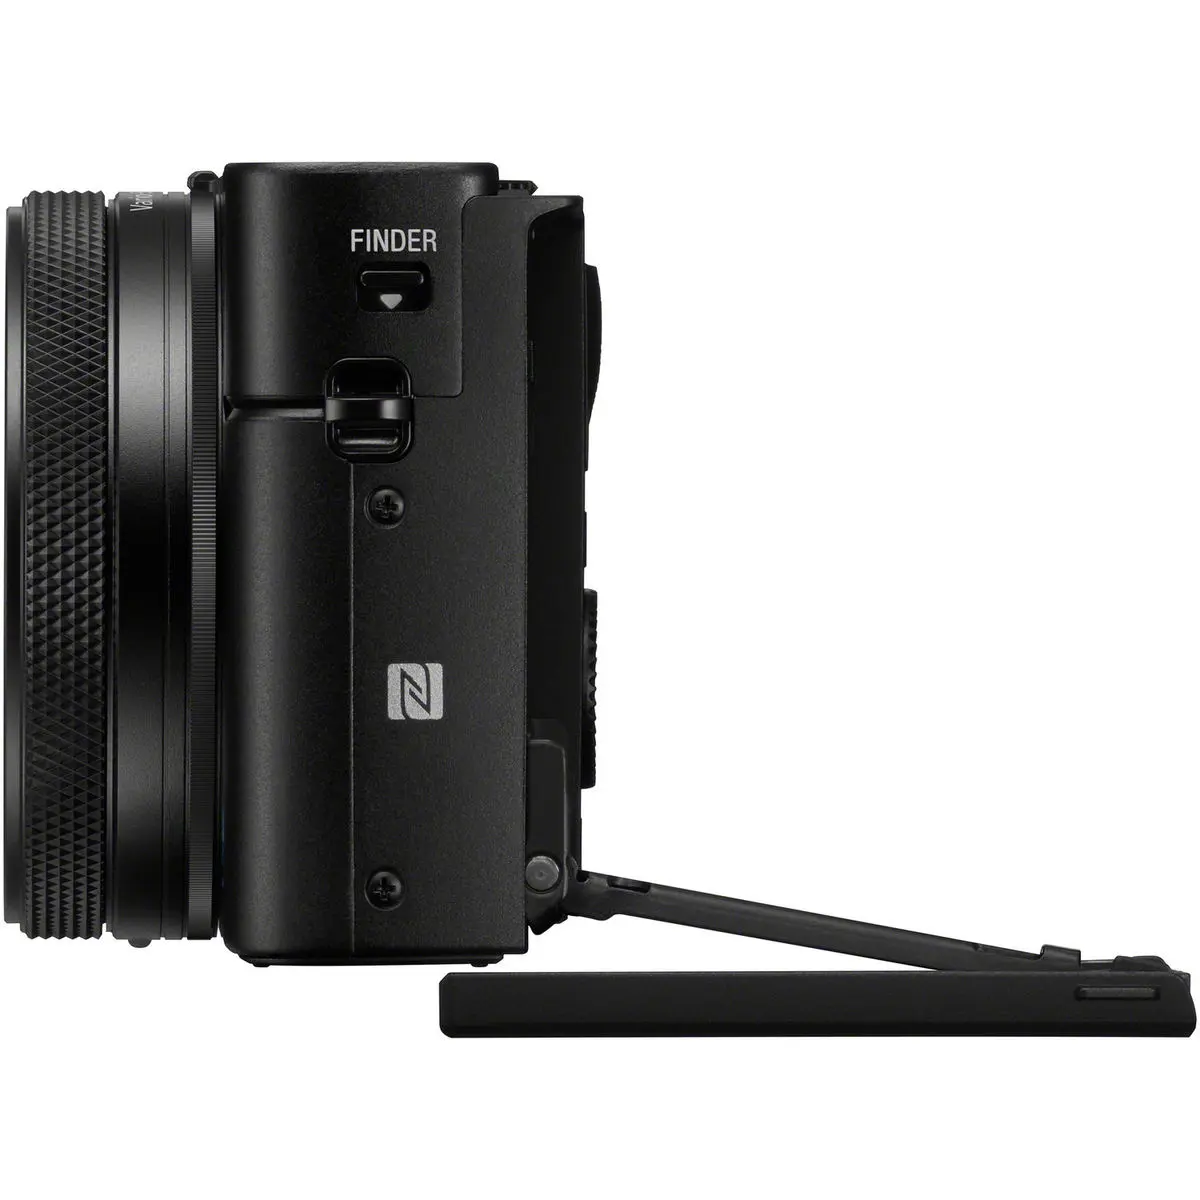 3. Sony Cyber-shot DSC-RX100M7G Camera